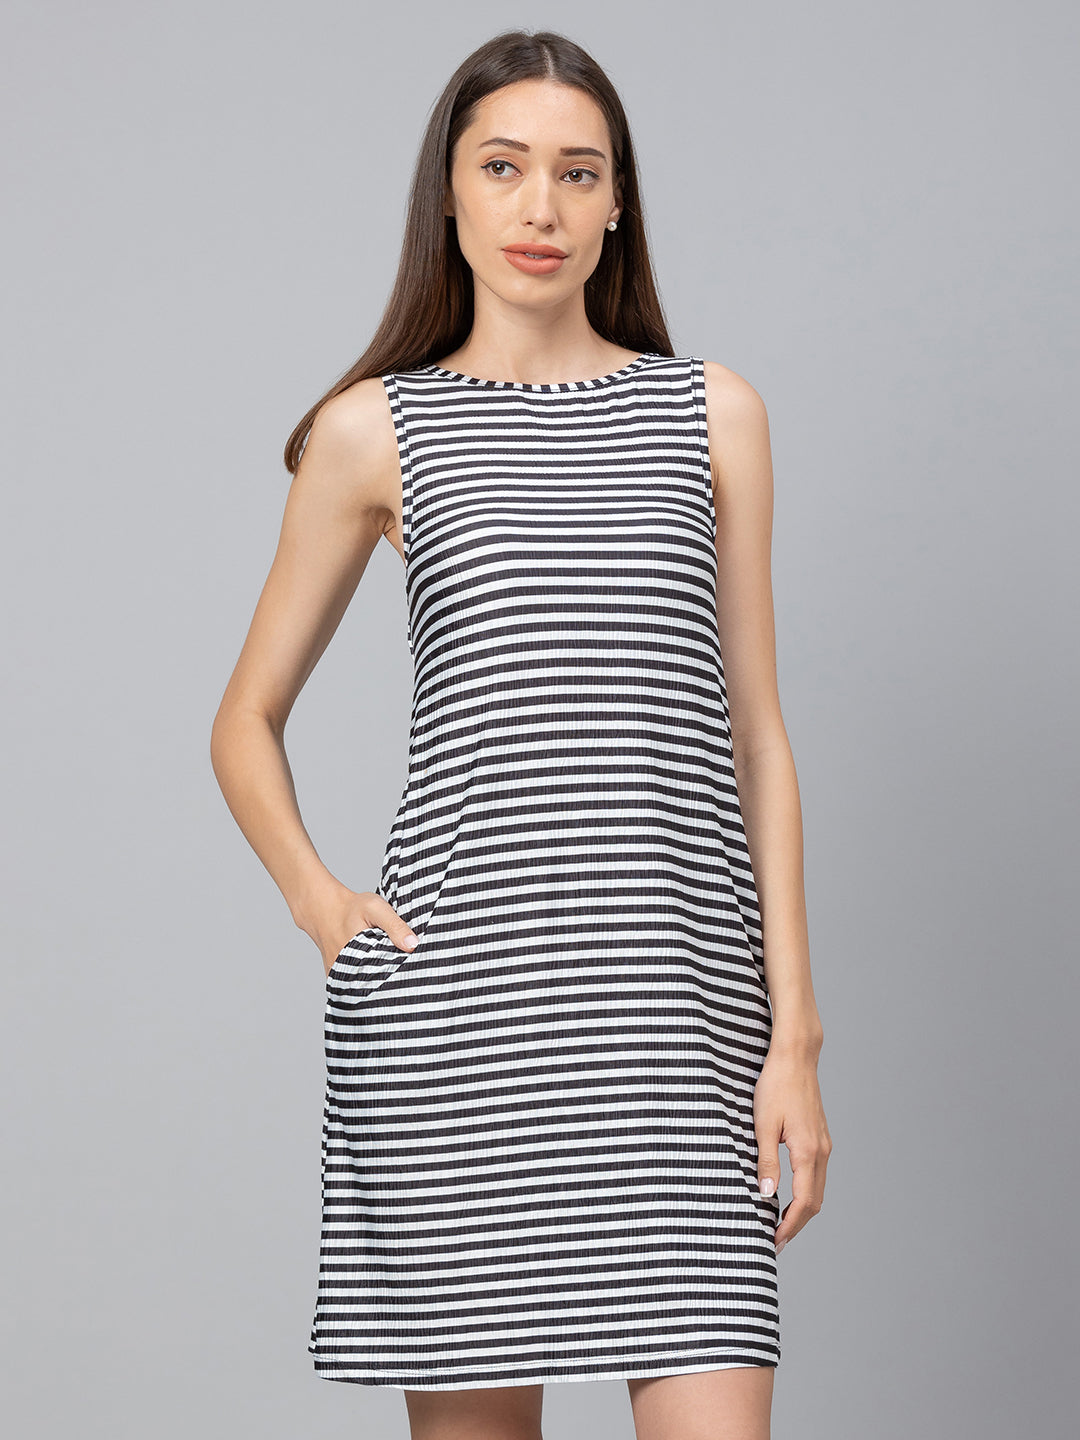 Globus Multi Striped Dress